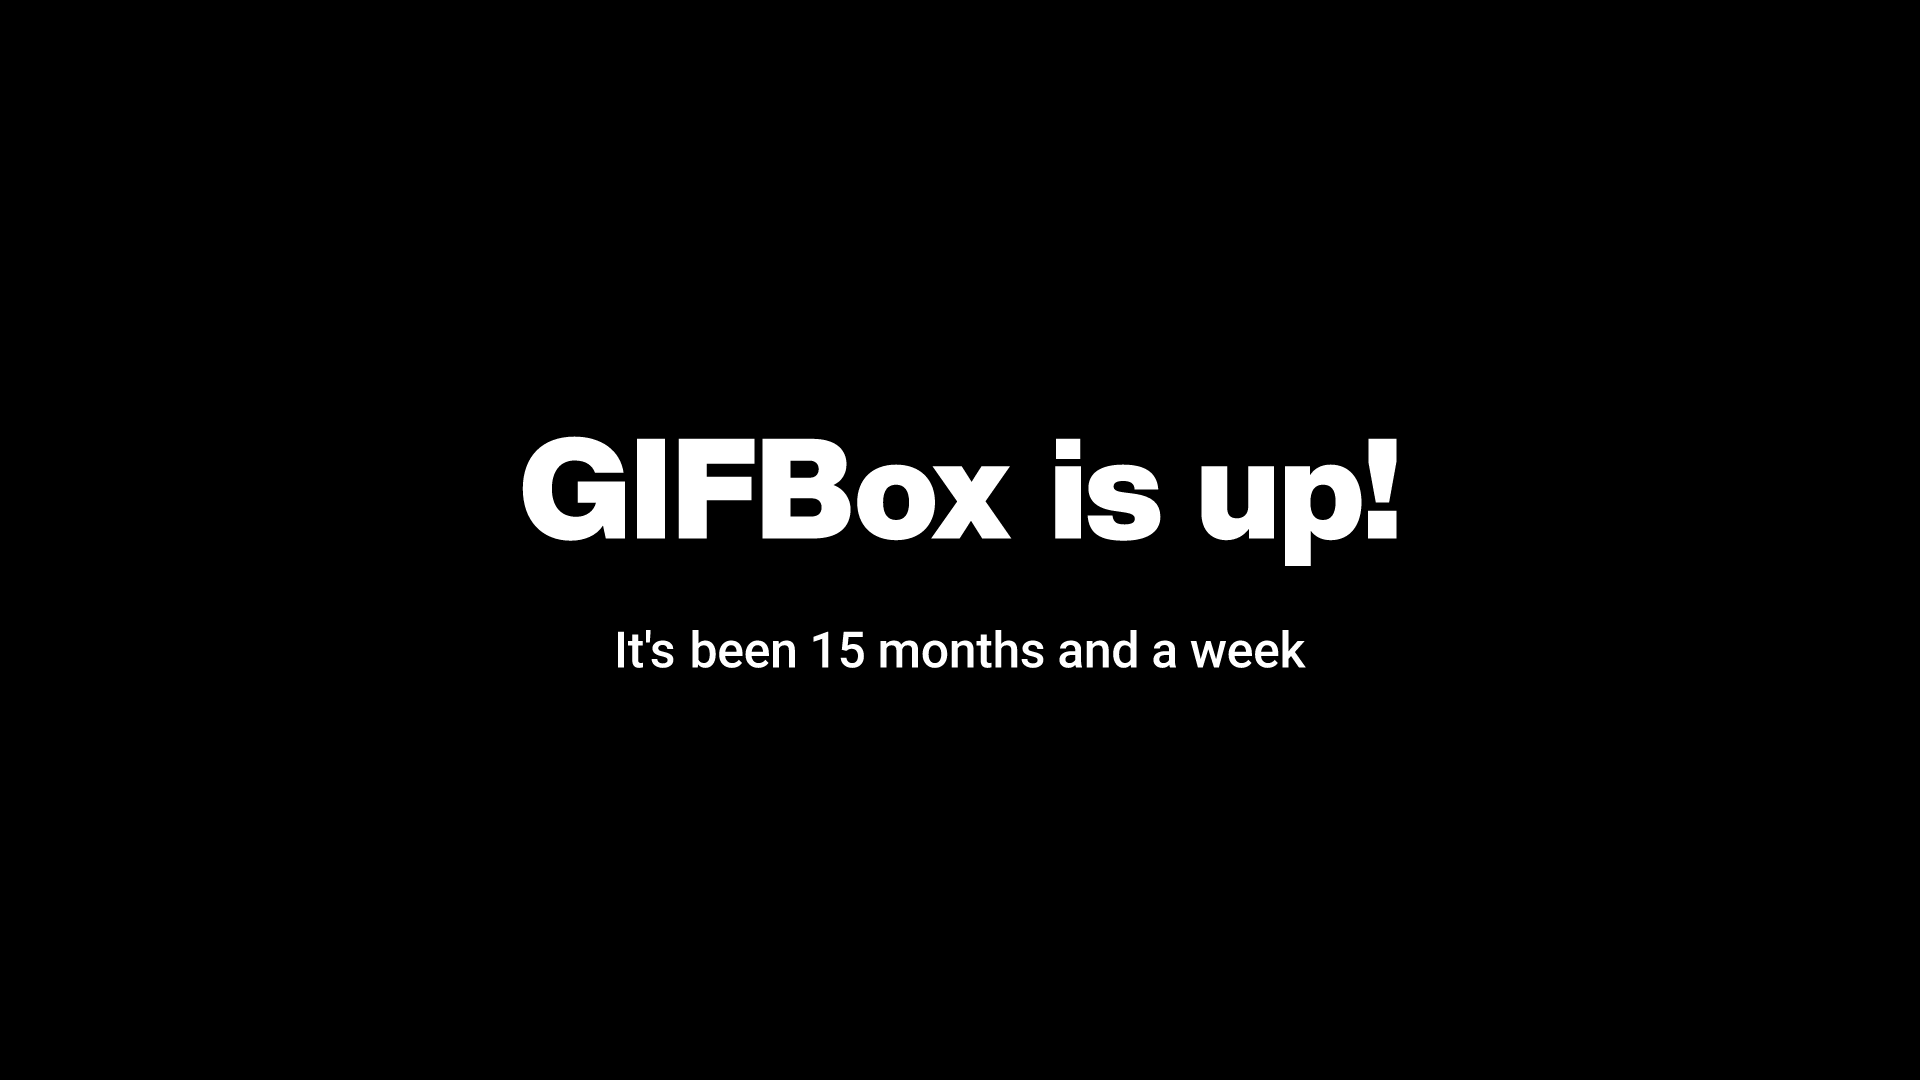 GIFBox is up!